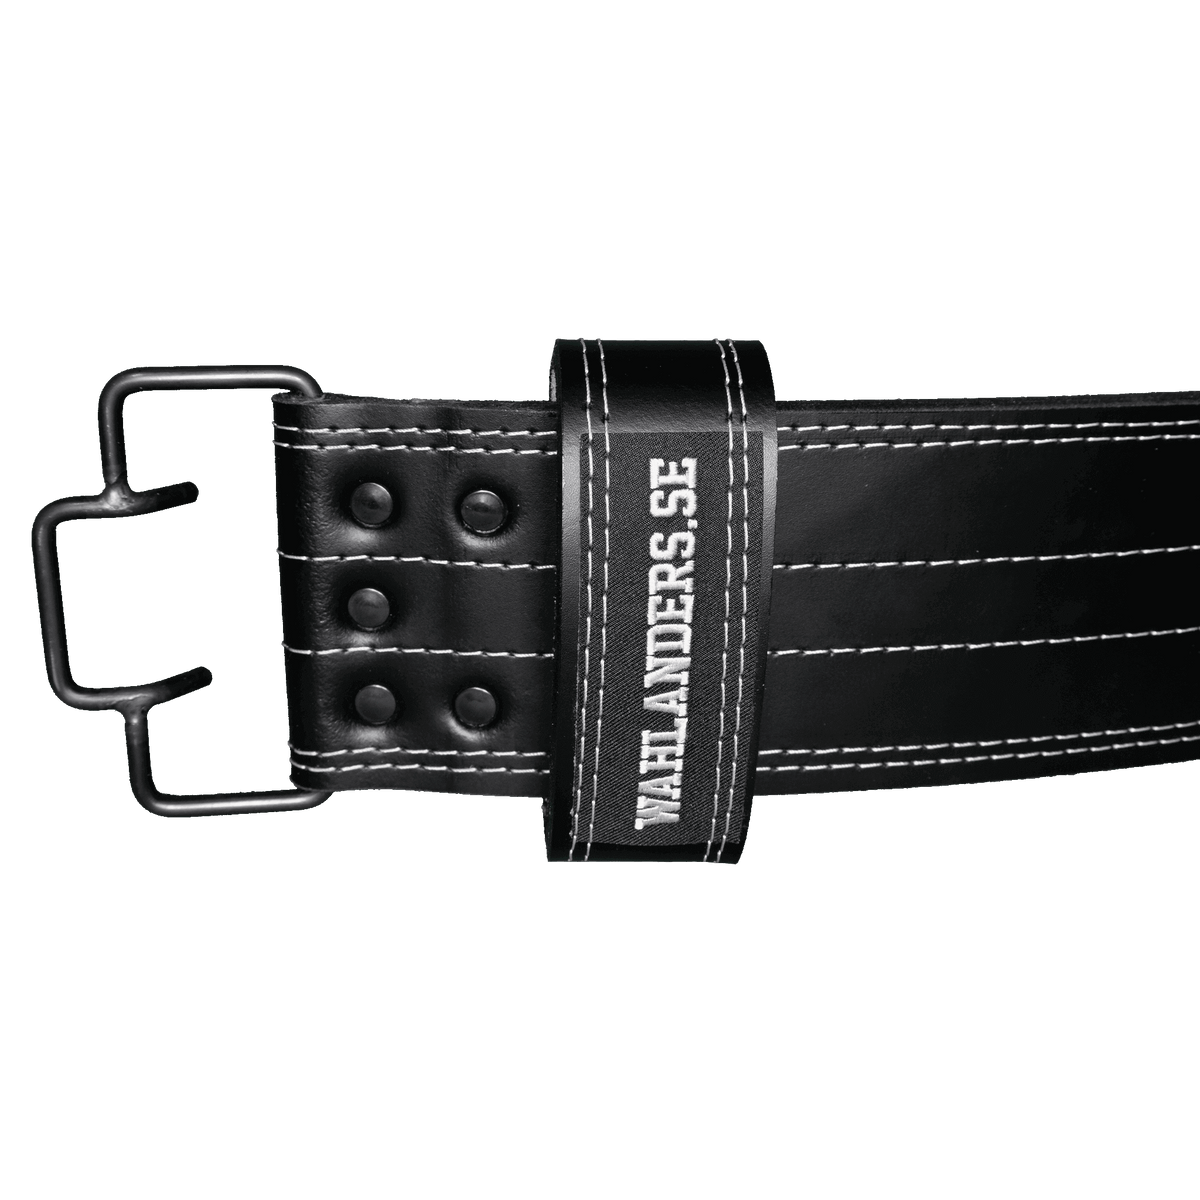 Wahlanders Powerlifting Belt, Black Leather, IPF Approved